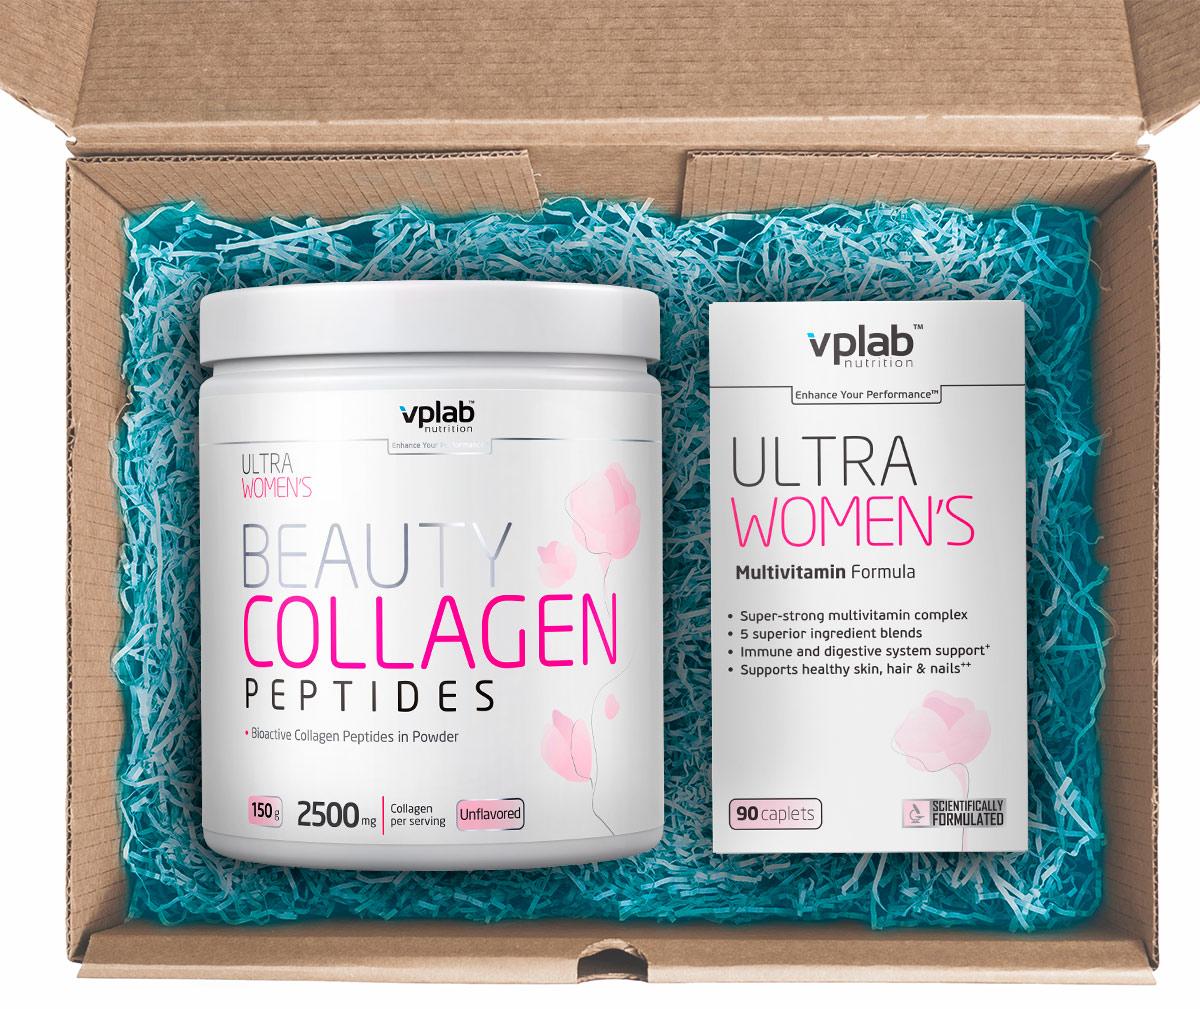 Набор для женщин: Ultra Women’s и Beauty Collagen, Vplab